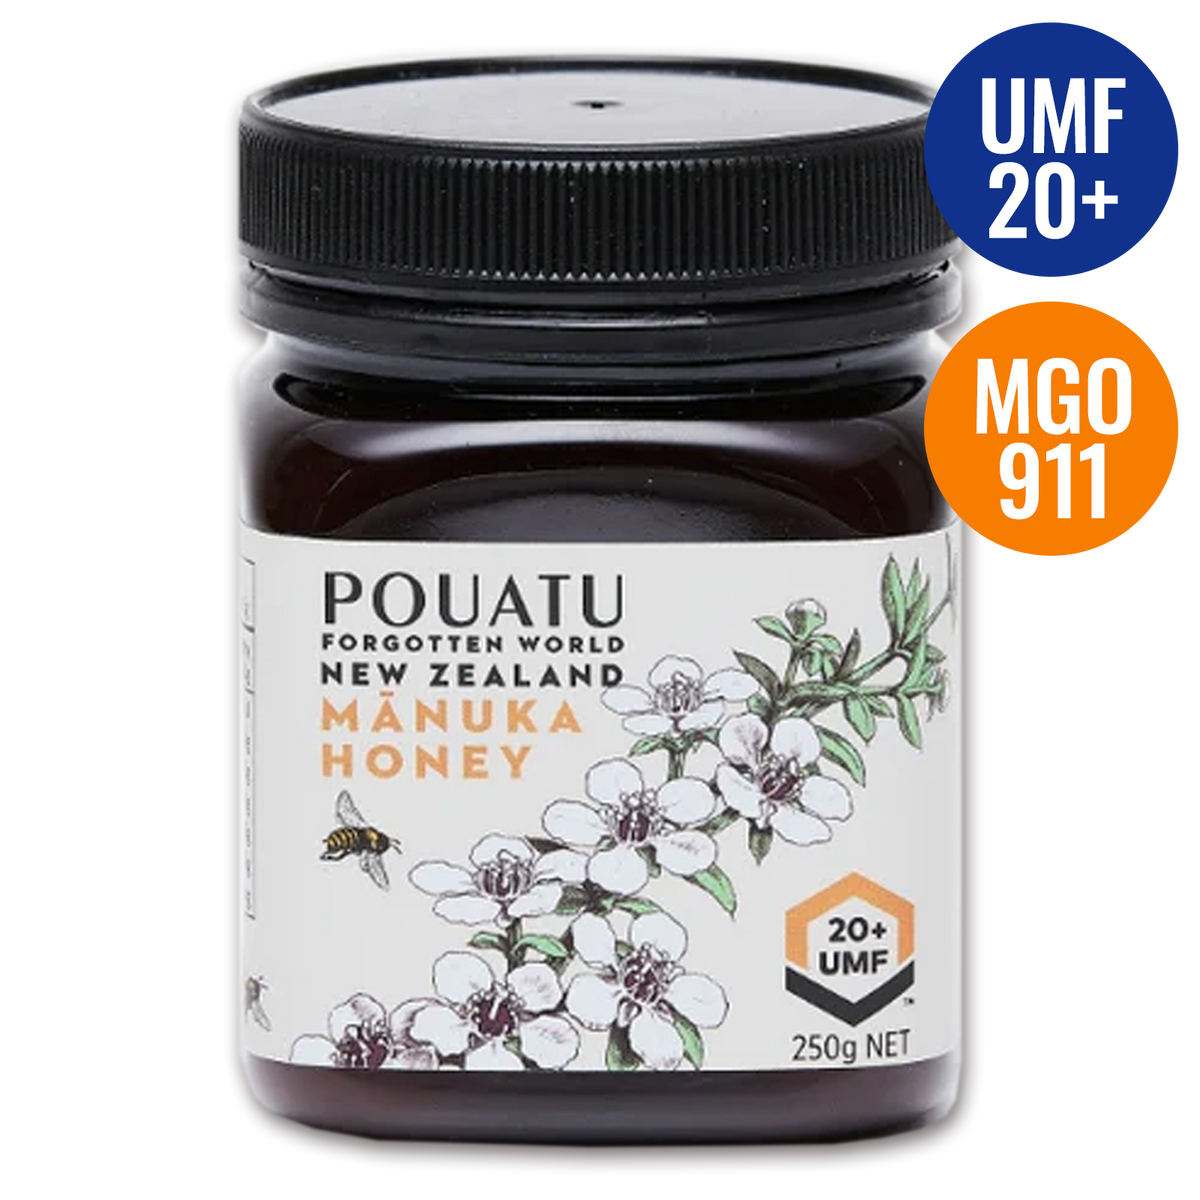 Premium All Natural Manuka Honey UMF20+ MGO911 from New Zealand (250g) - Horizon Farms